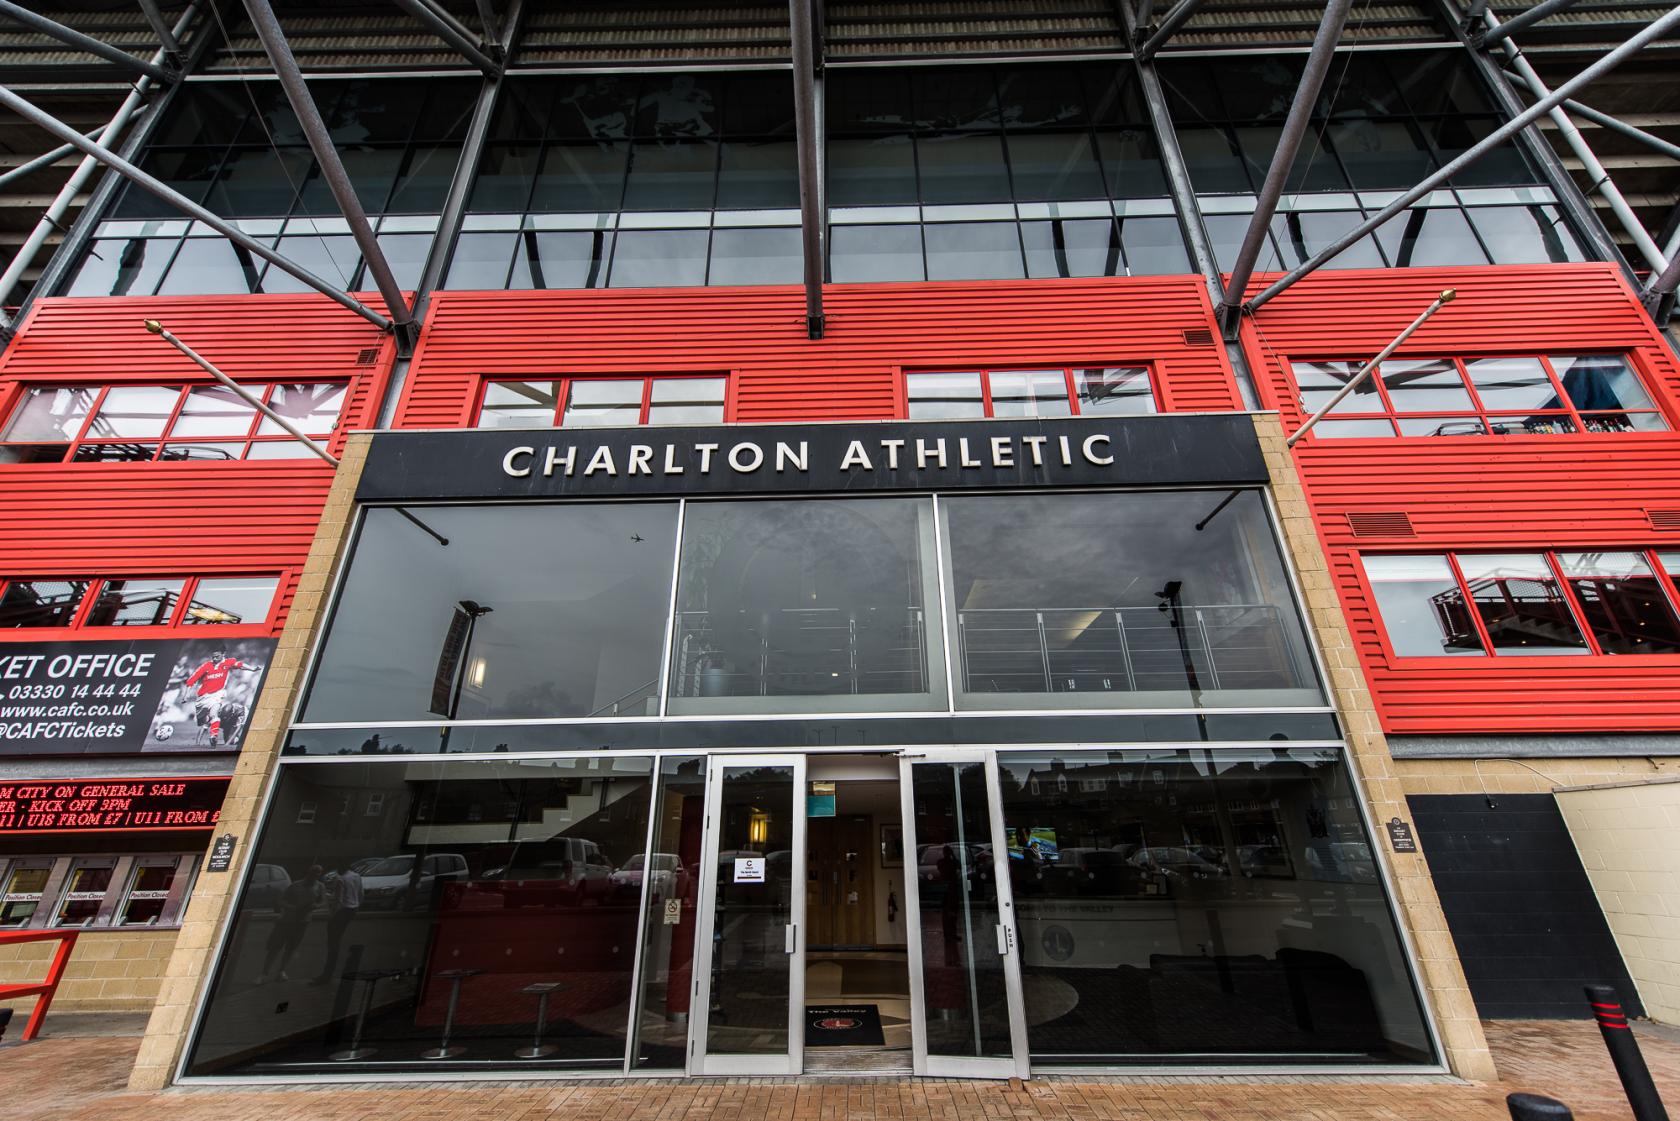 Charlton Athletic Football Club - Event Venue Hire - London - Tagvenue.com